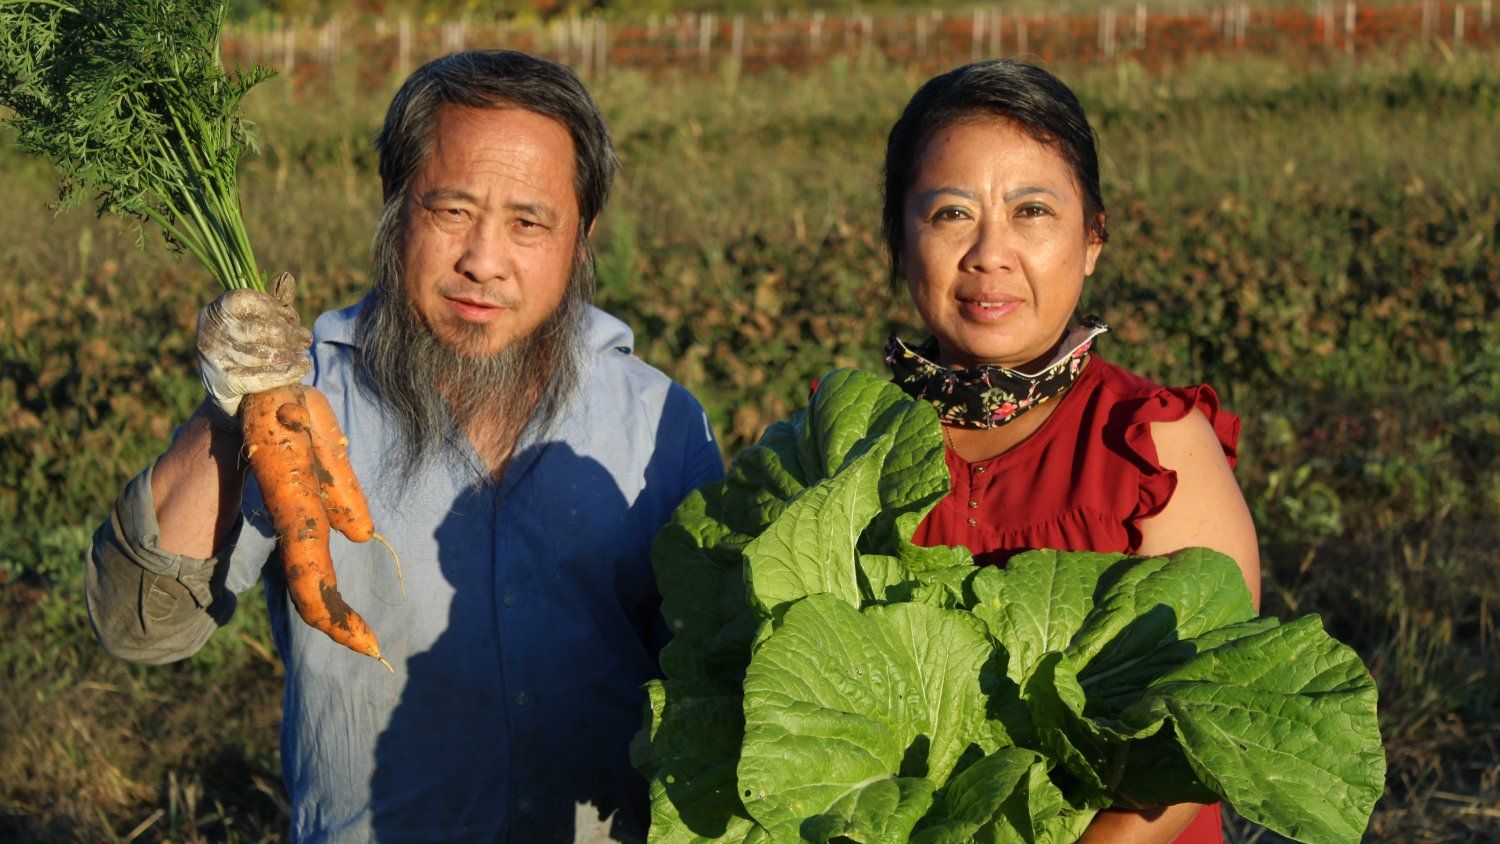 Next Happening: Meet Farmers Lue & Kia